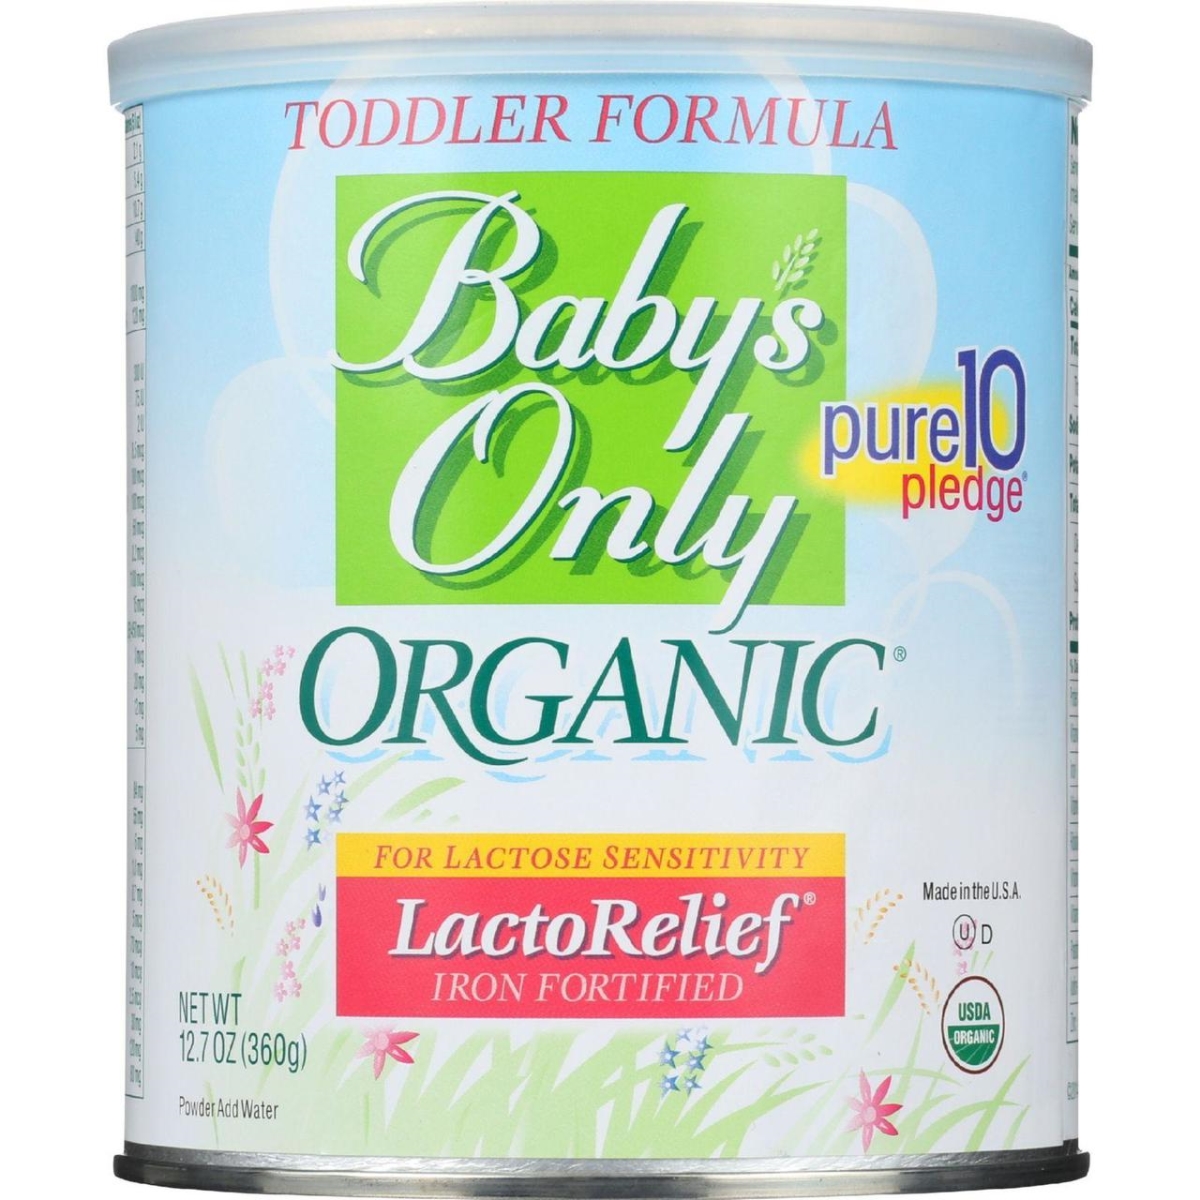 Hg0837476 12.7 Oz Organic Toddler Formula - Lactorelief & Lactose Free